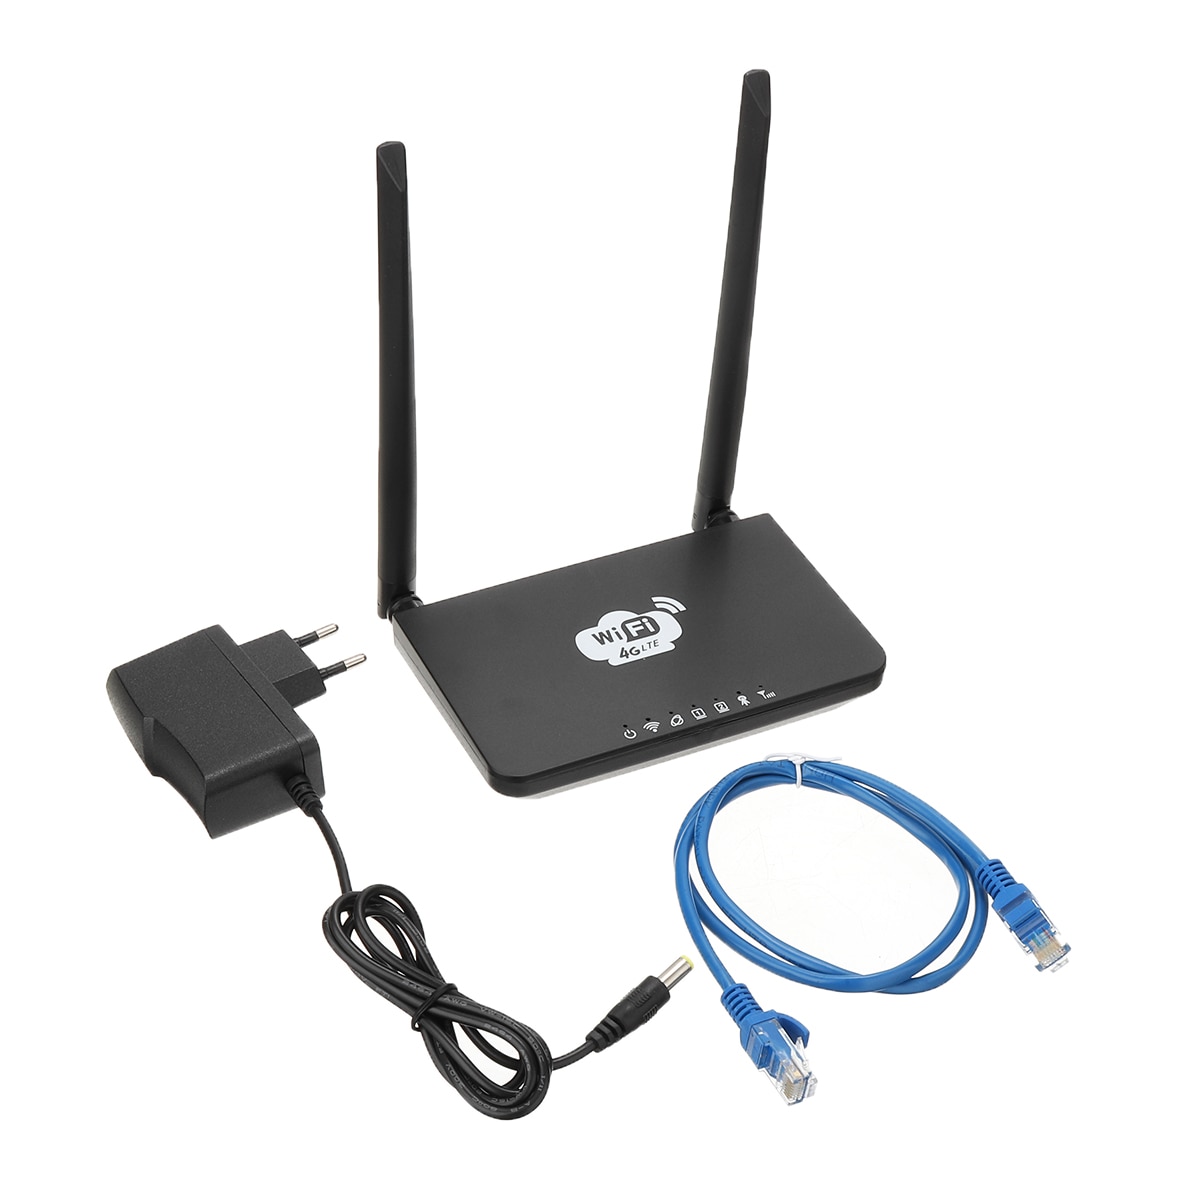 Abs 1pc 4g lte trådløs router hjem mobil wifi hotspot w / 6- pin sim-kortslot 14 x 8.5 x2.4cm 300 mbps